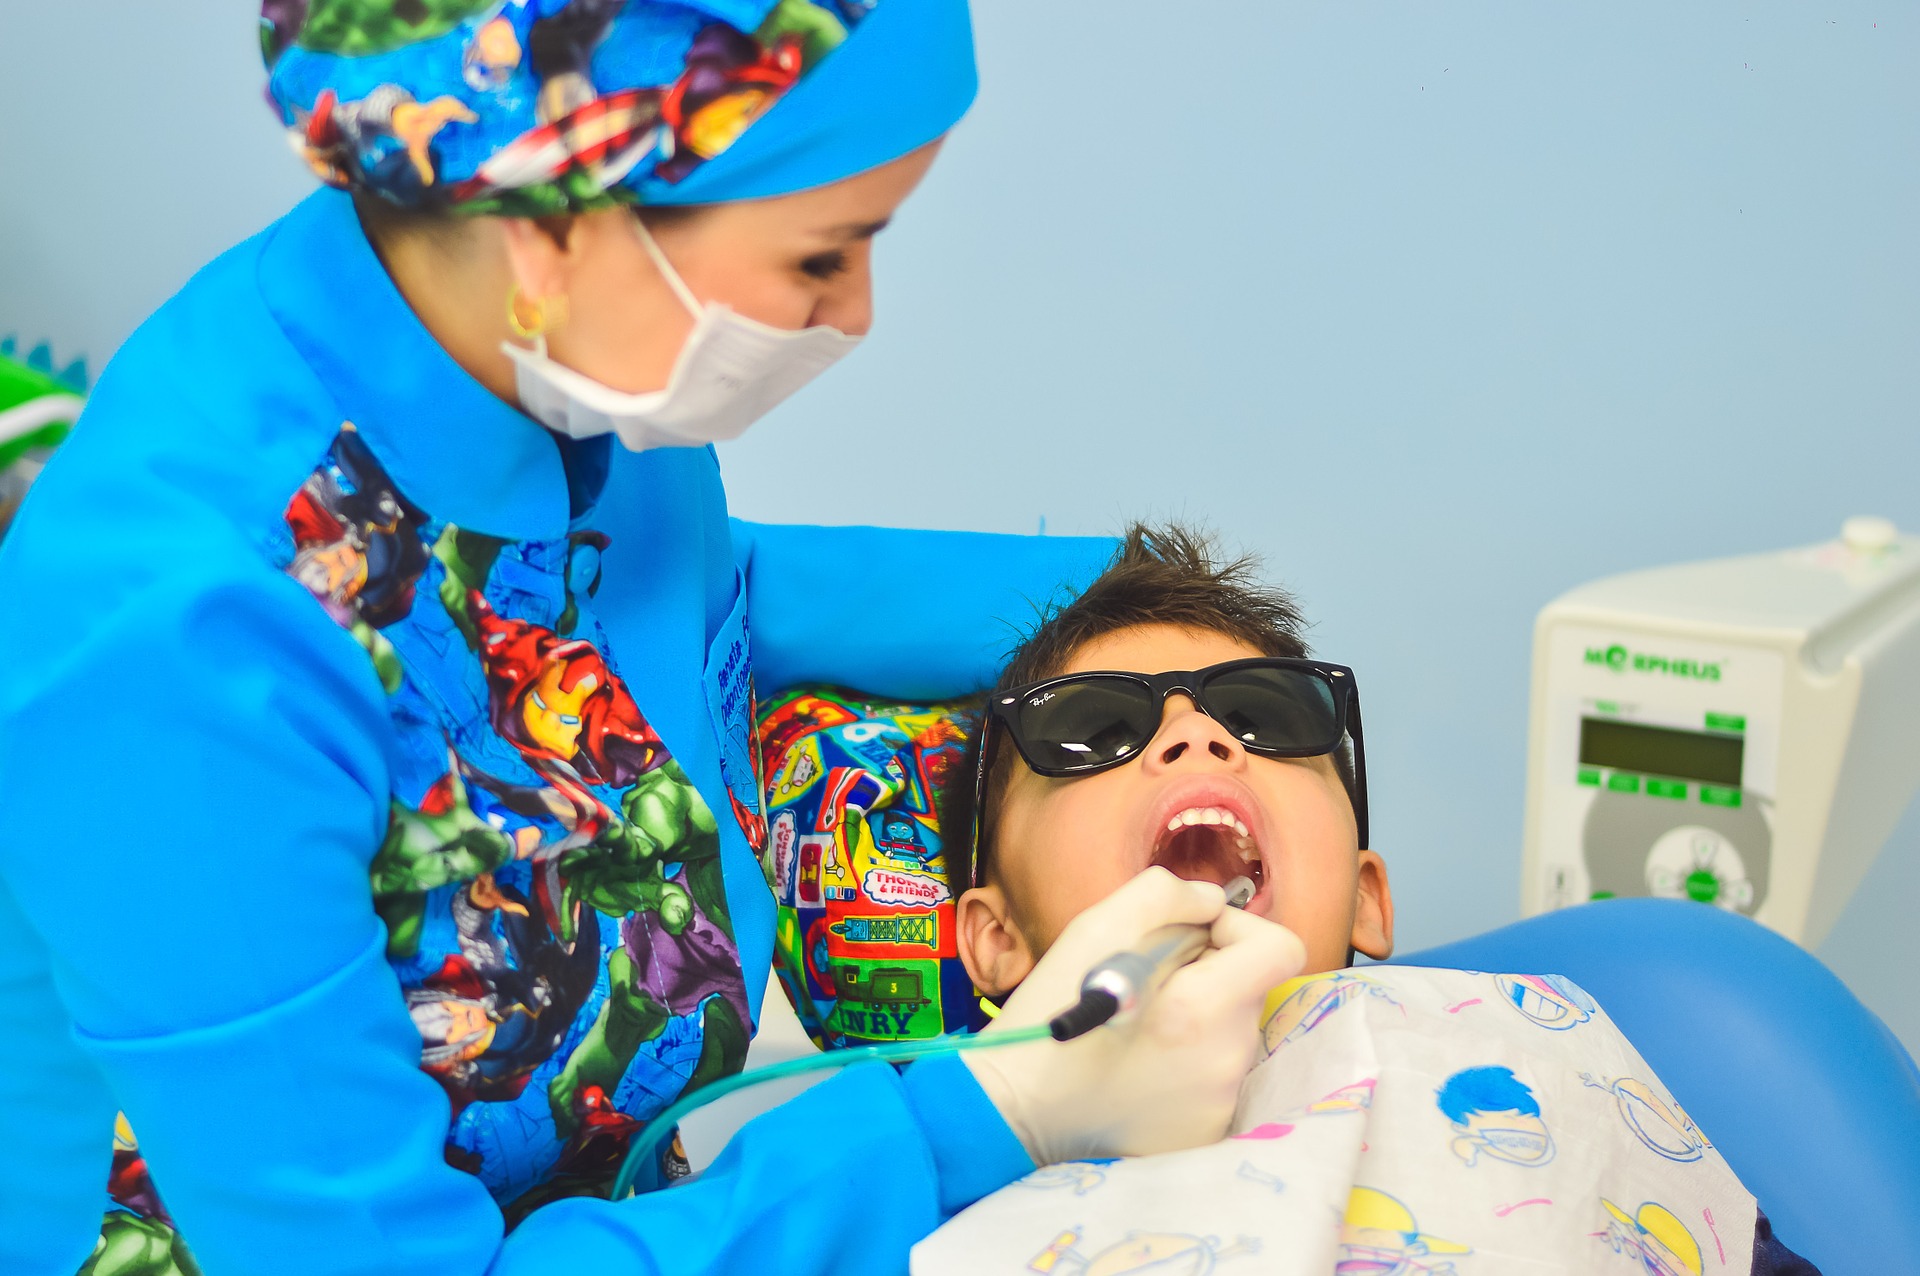 Child Dental Care